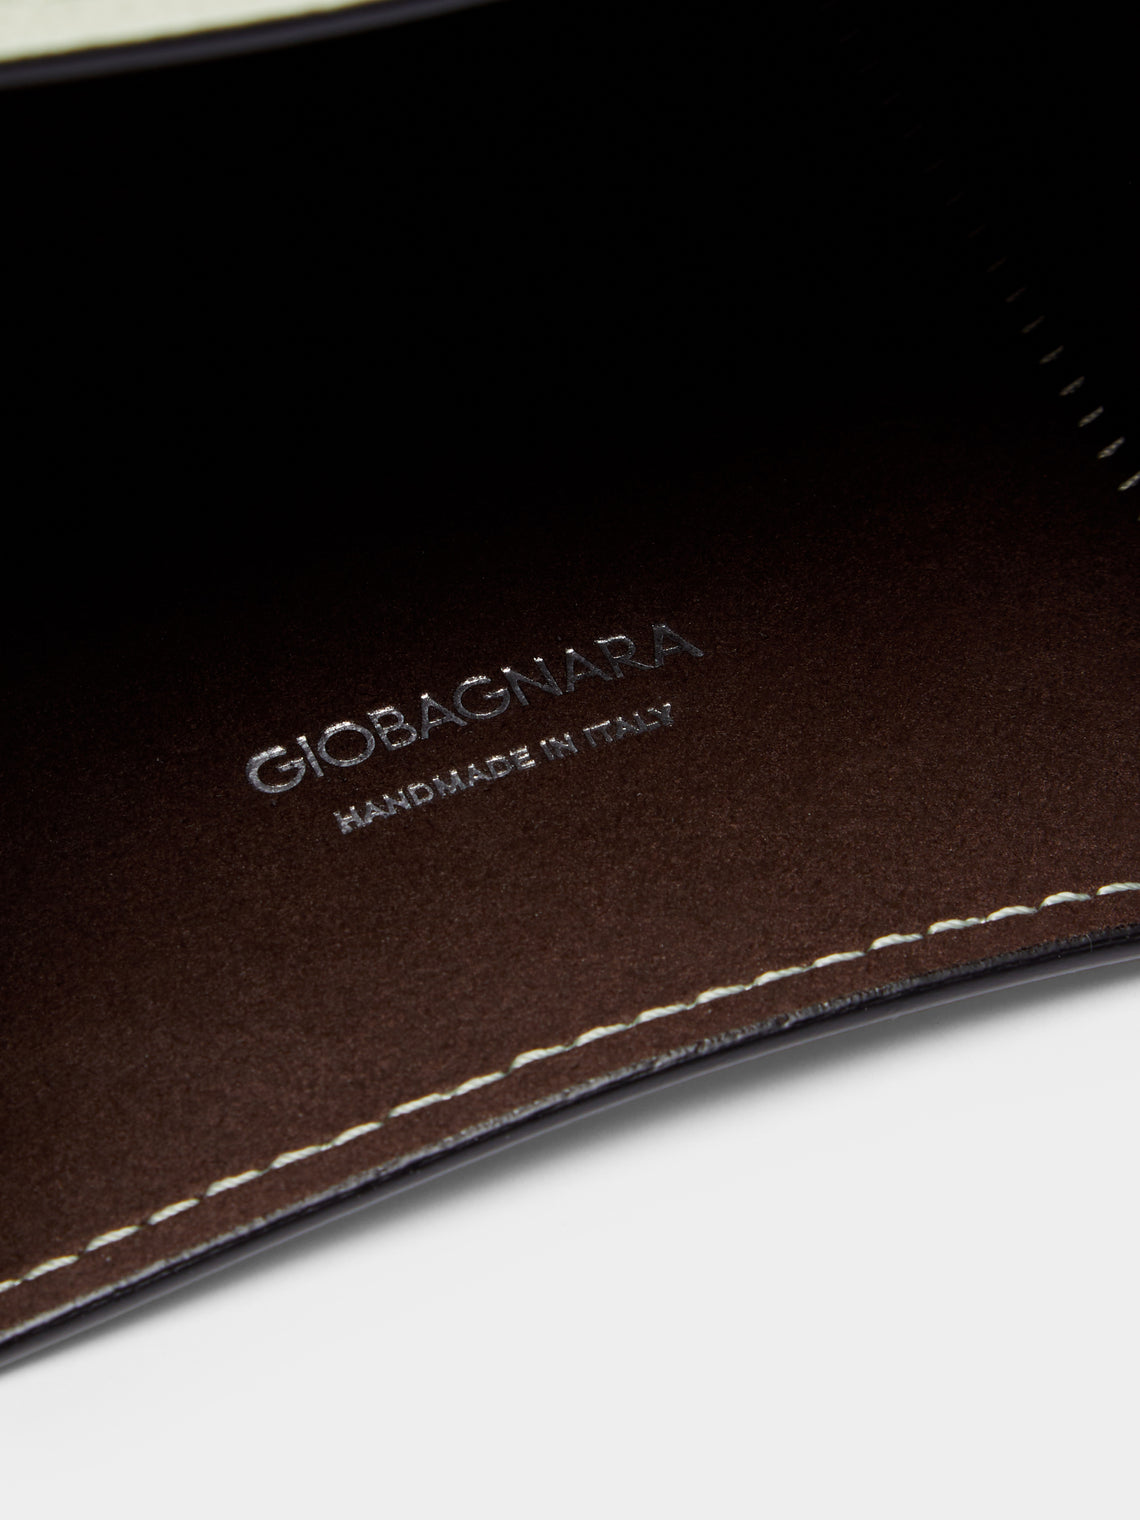 Giobagnara - Ready Leather Tissue Box -  - ABASK